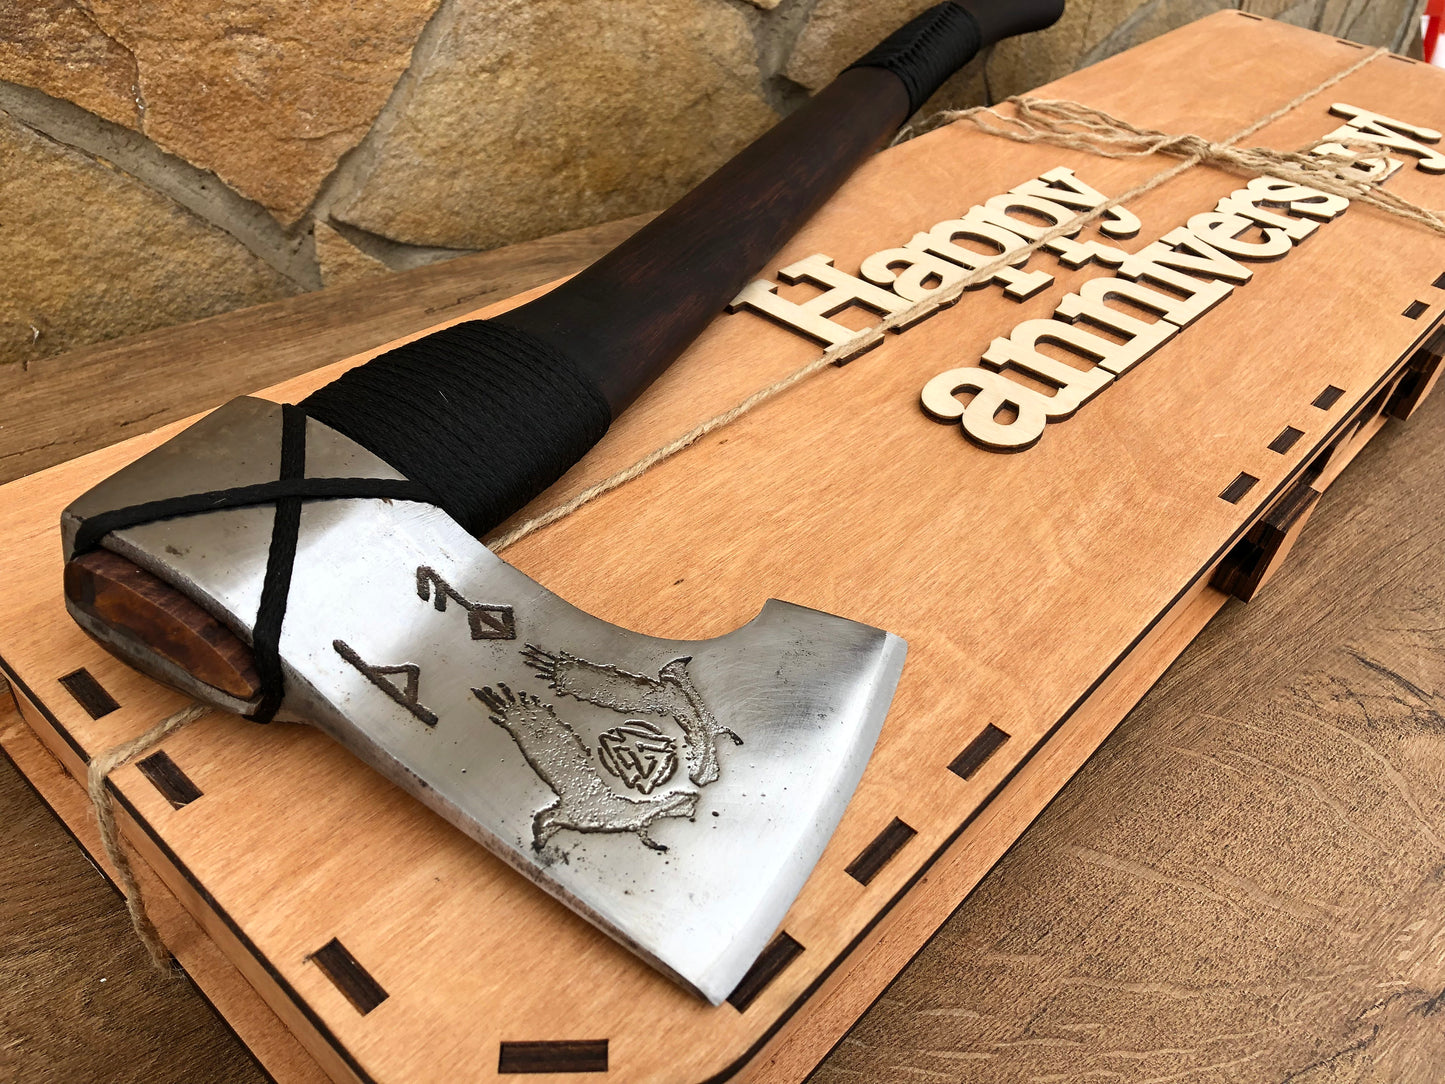 Hatchet, viking axe, tomahawk, gift box, axe gift, 6th anniversary, 11th anniversary, viking camp kit, viking gifts, iron gifts, anniversary